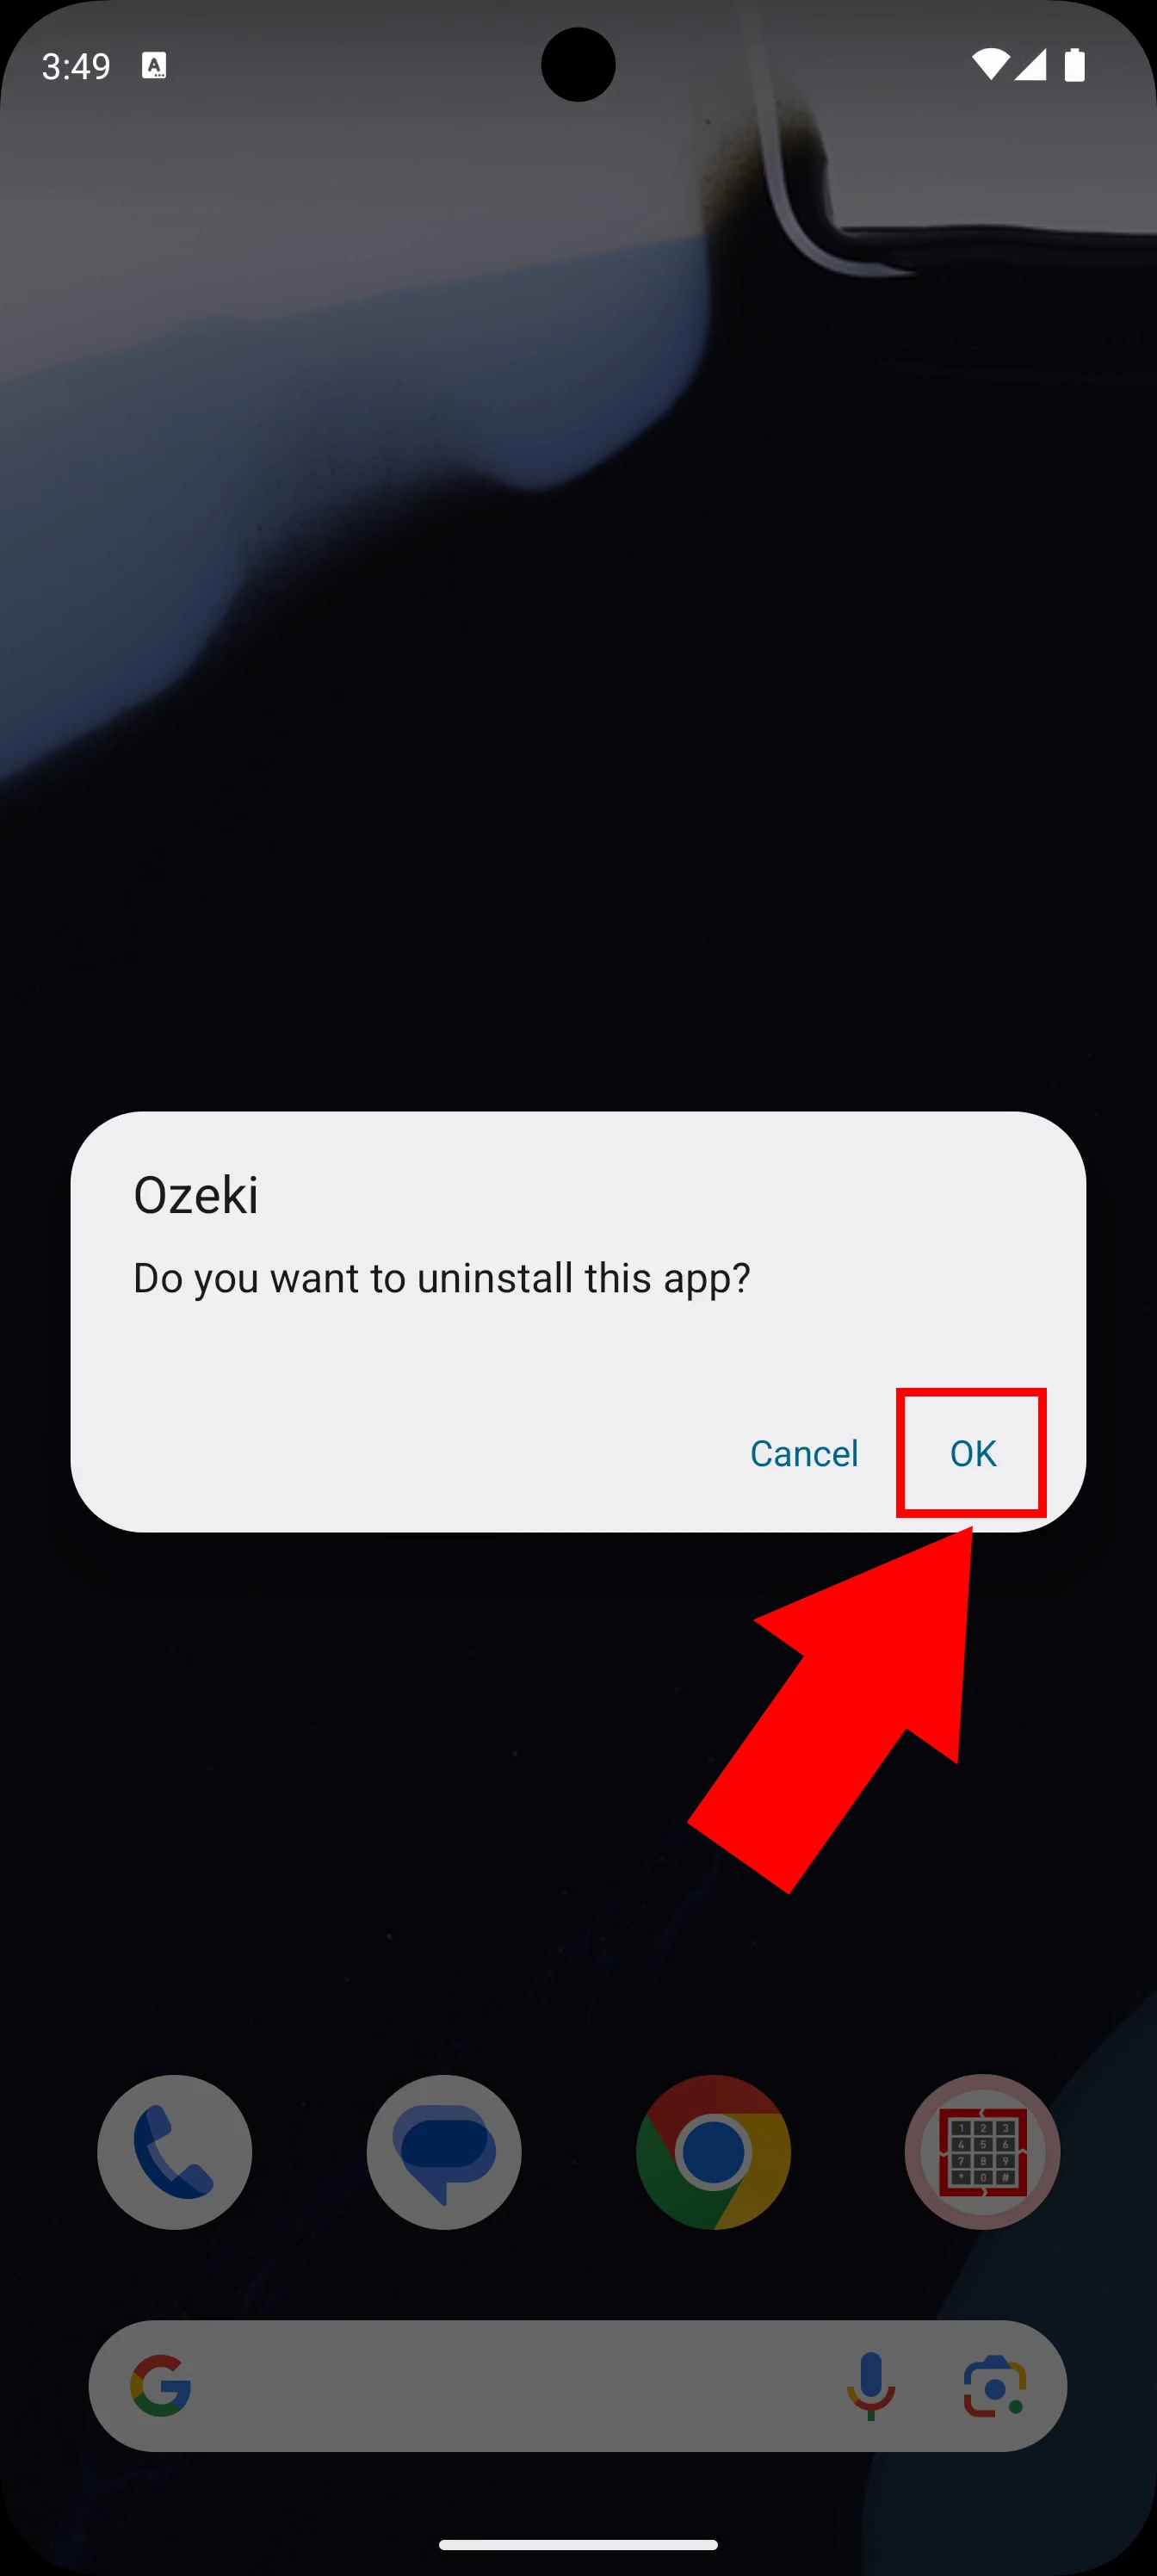 Accept to uninstall Ozeki app